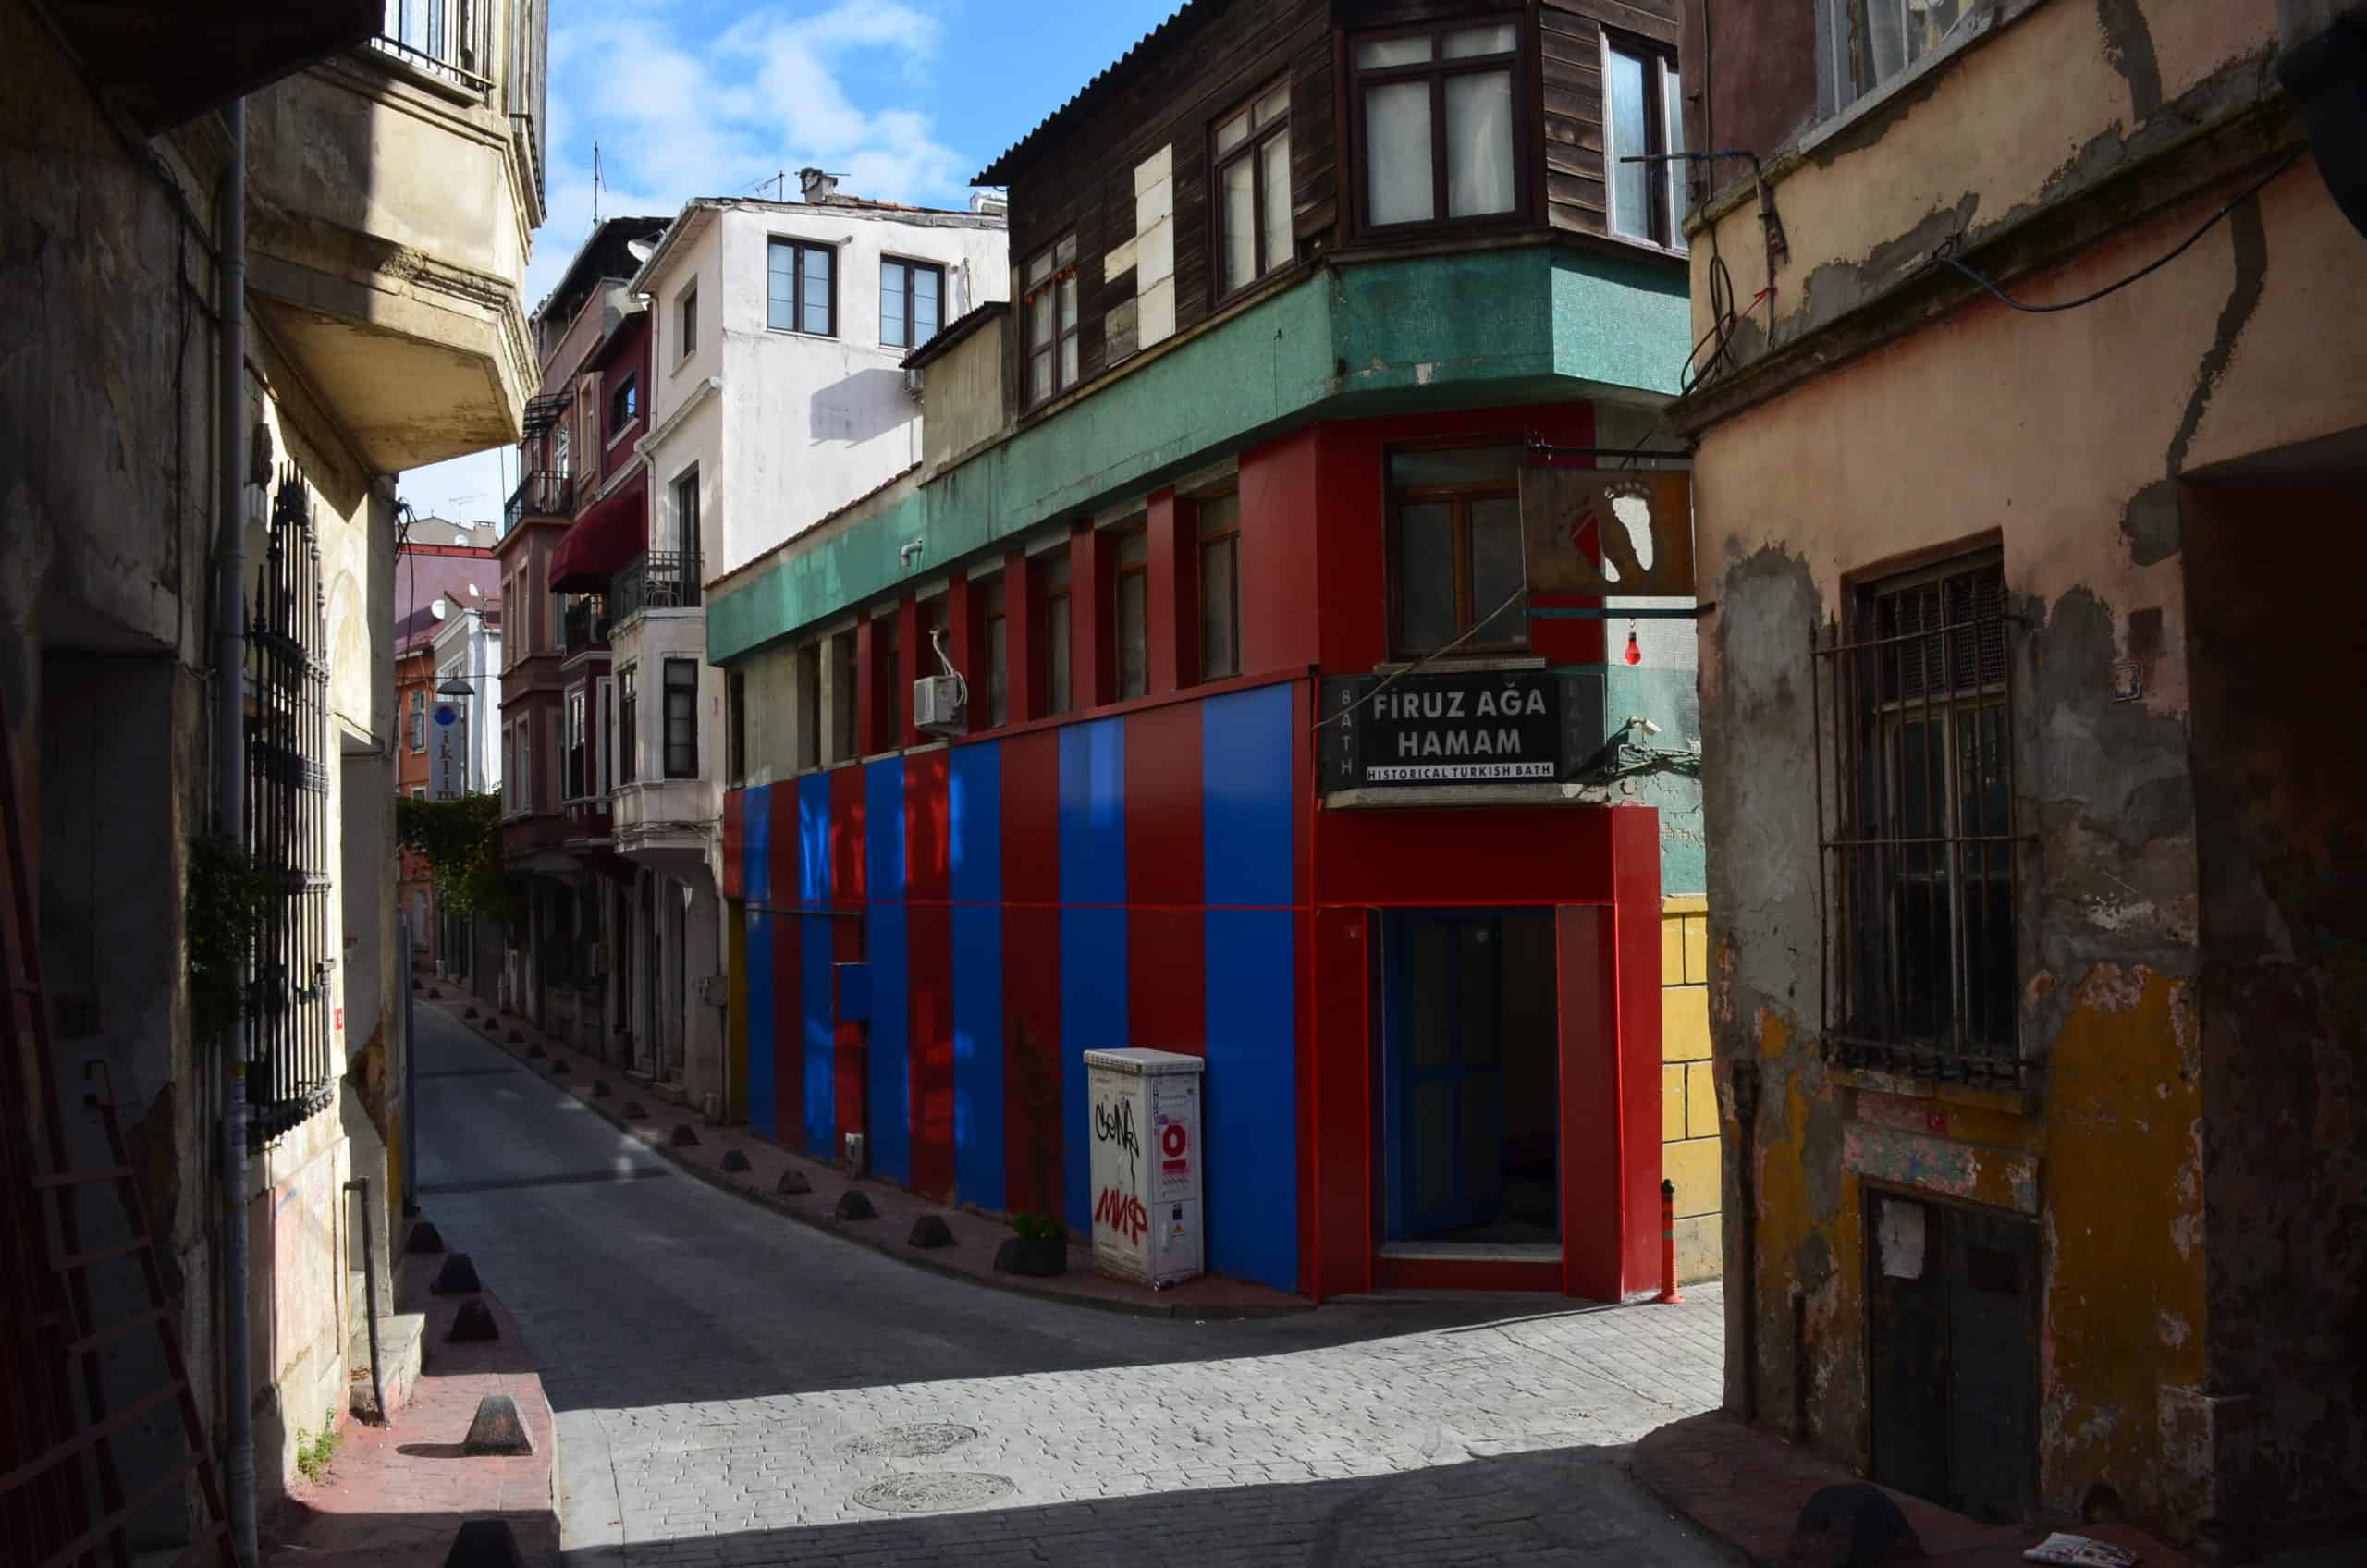 Çukur Cuma Street in Çukurcuma, Istanbul, Turkey